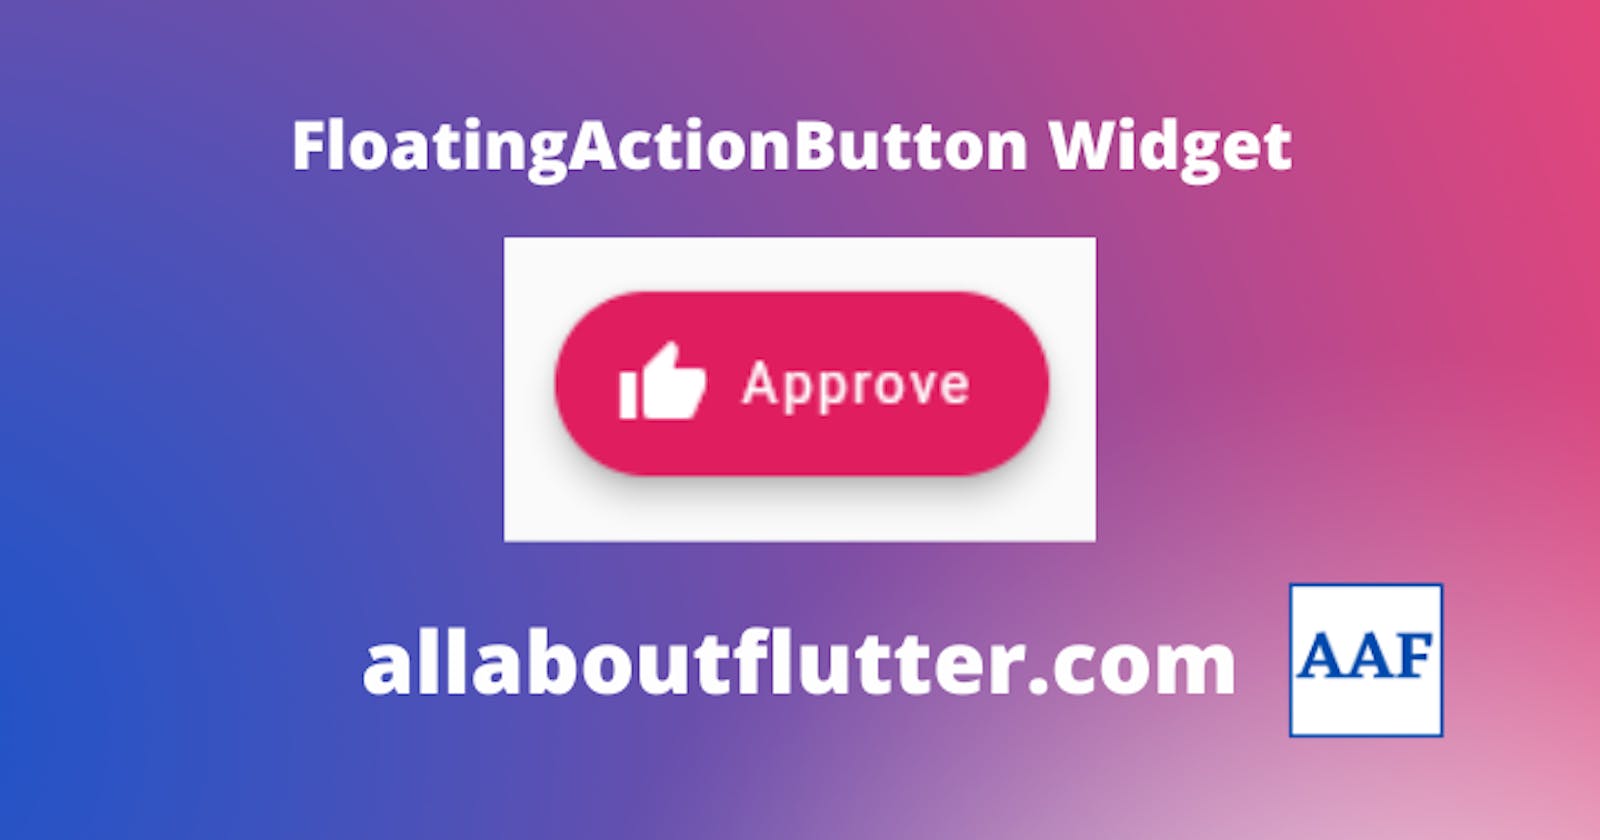 FloatingActionButton Widget in Flutter - Tutorial